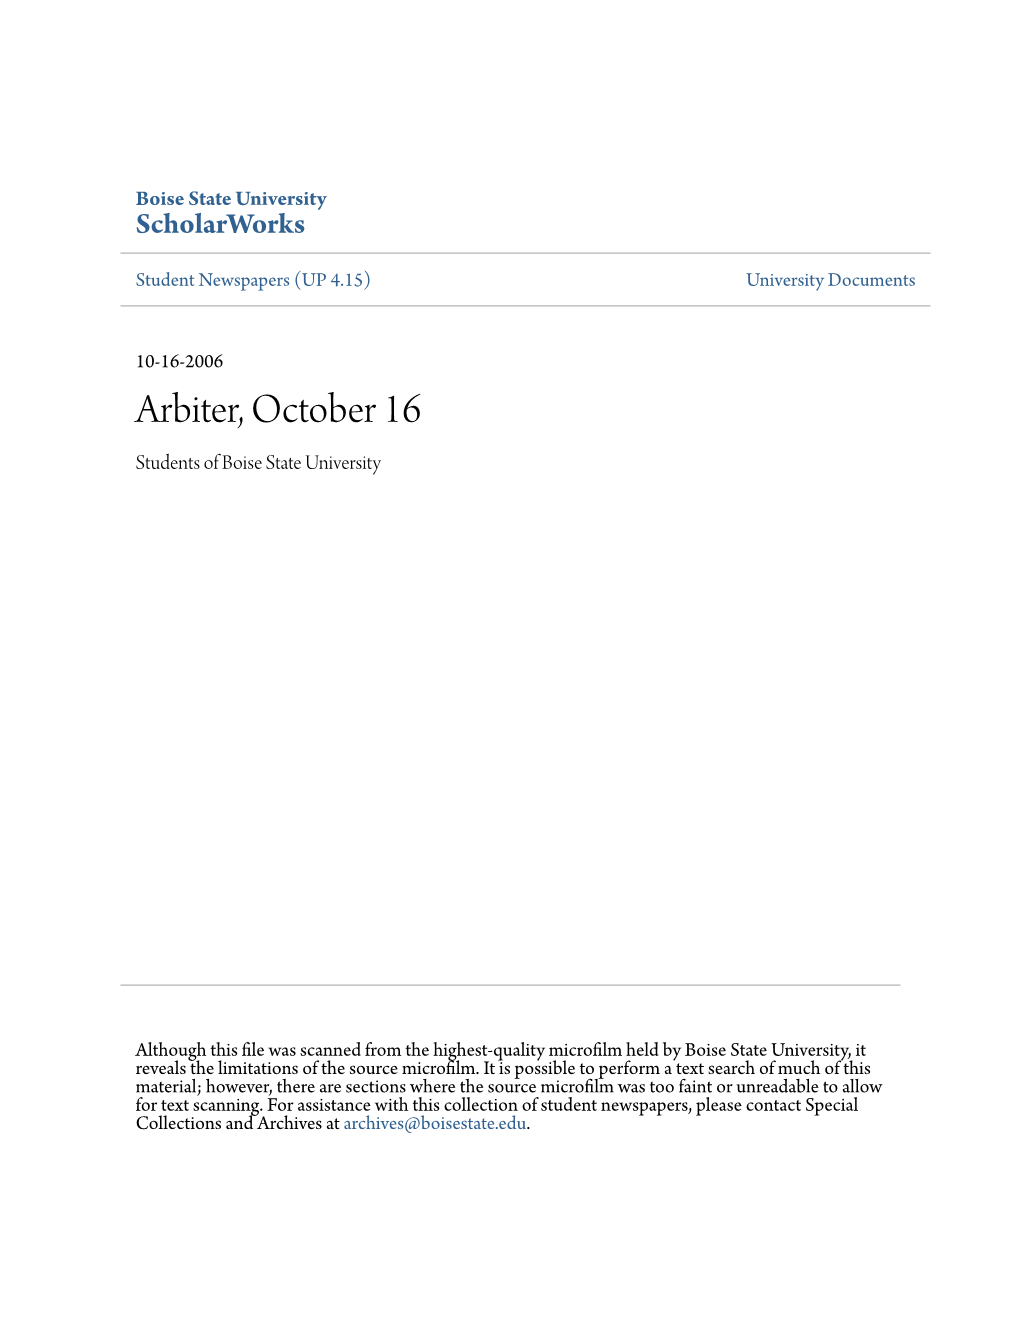 Arbiter, October 16 Students of Boise State University